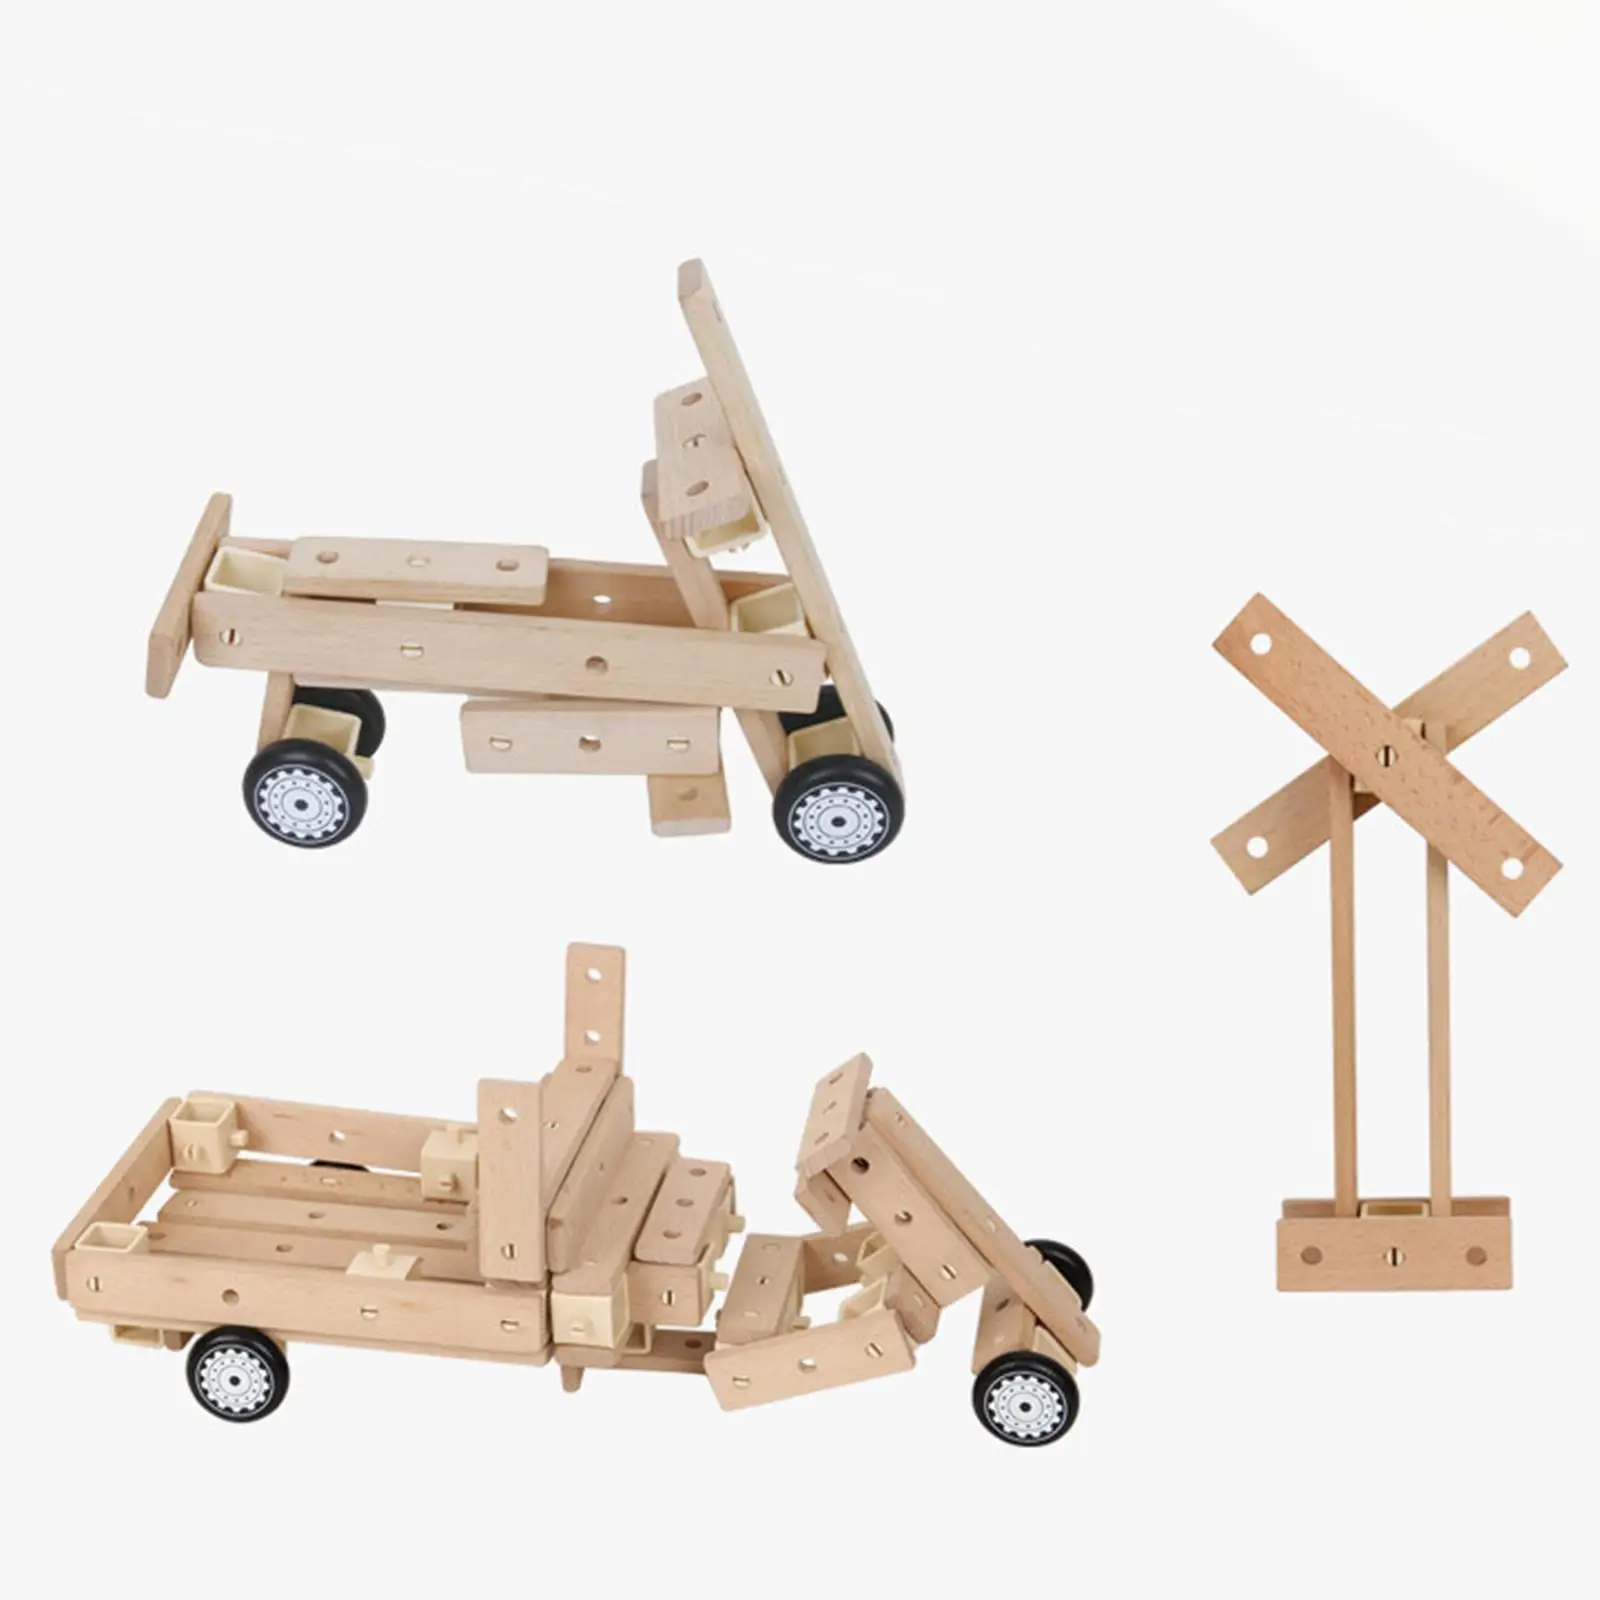 Wooden Building Blocks Set Wood Planks Set Early Development Construction Toys